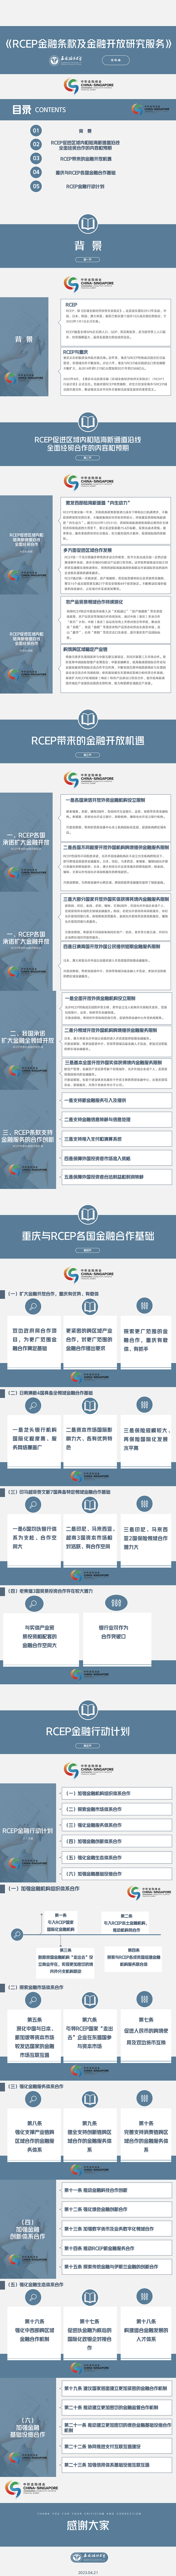 RCEP金融条款及金融开放研究报告.png